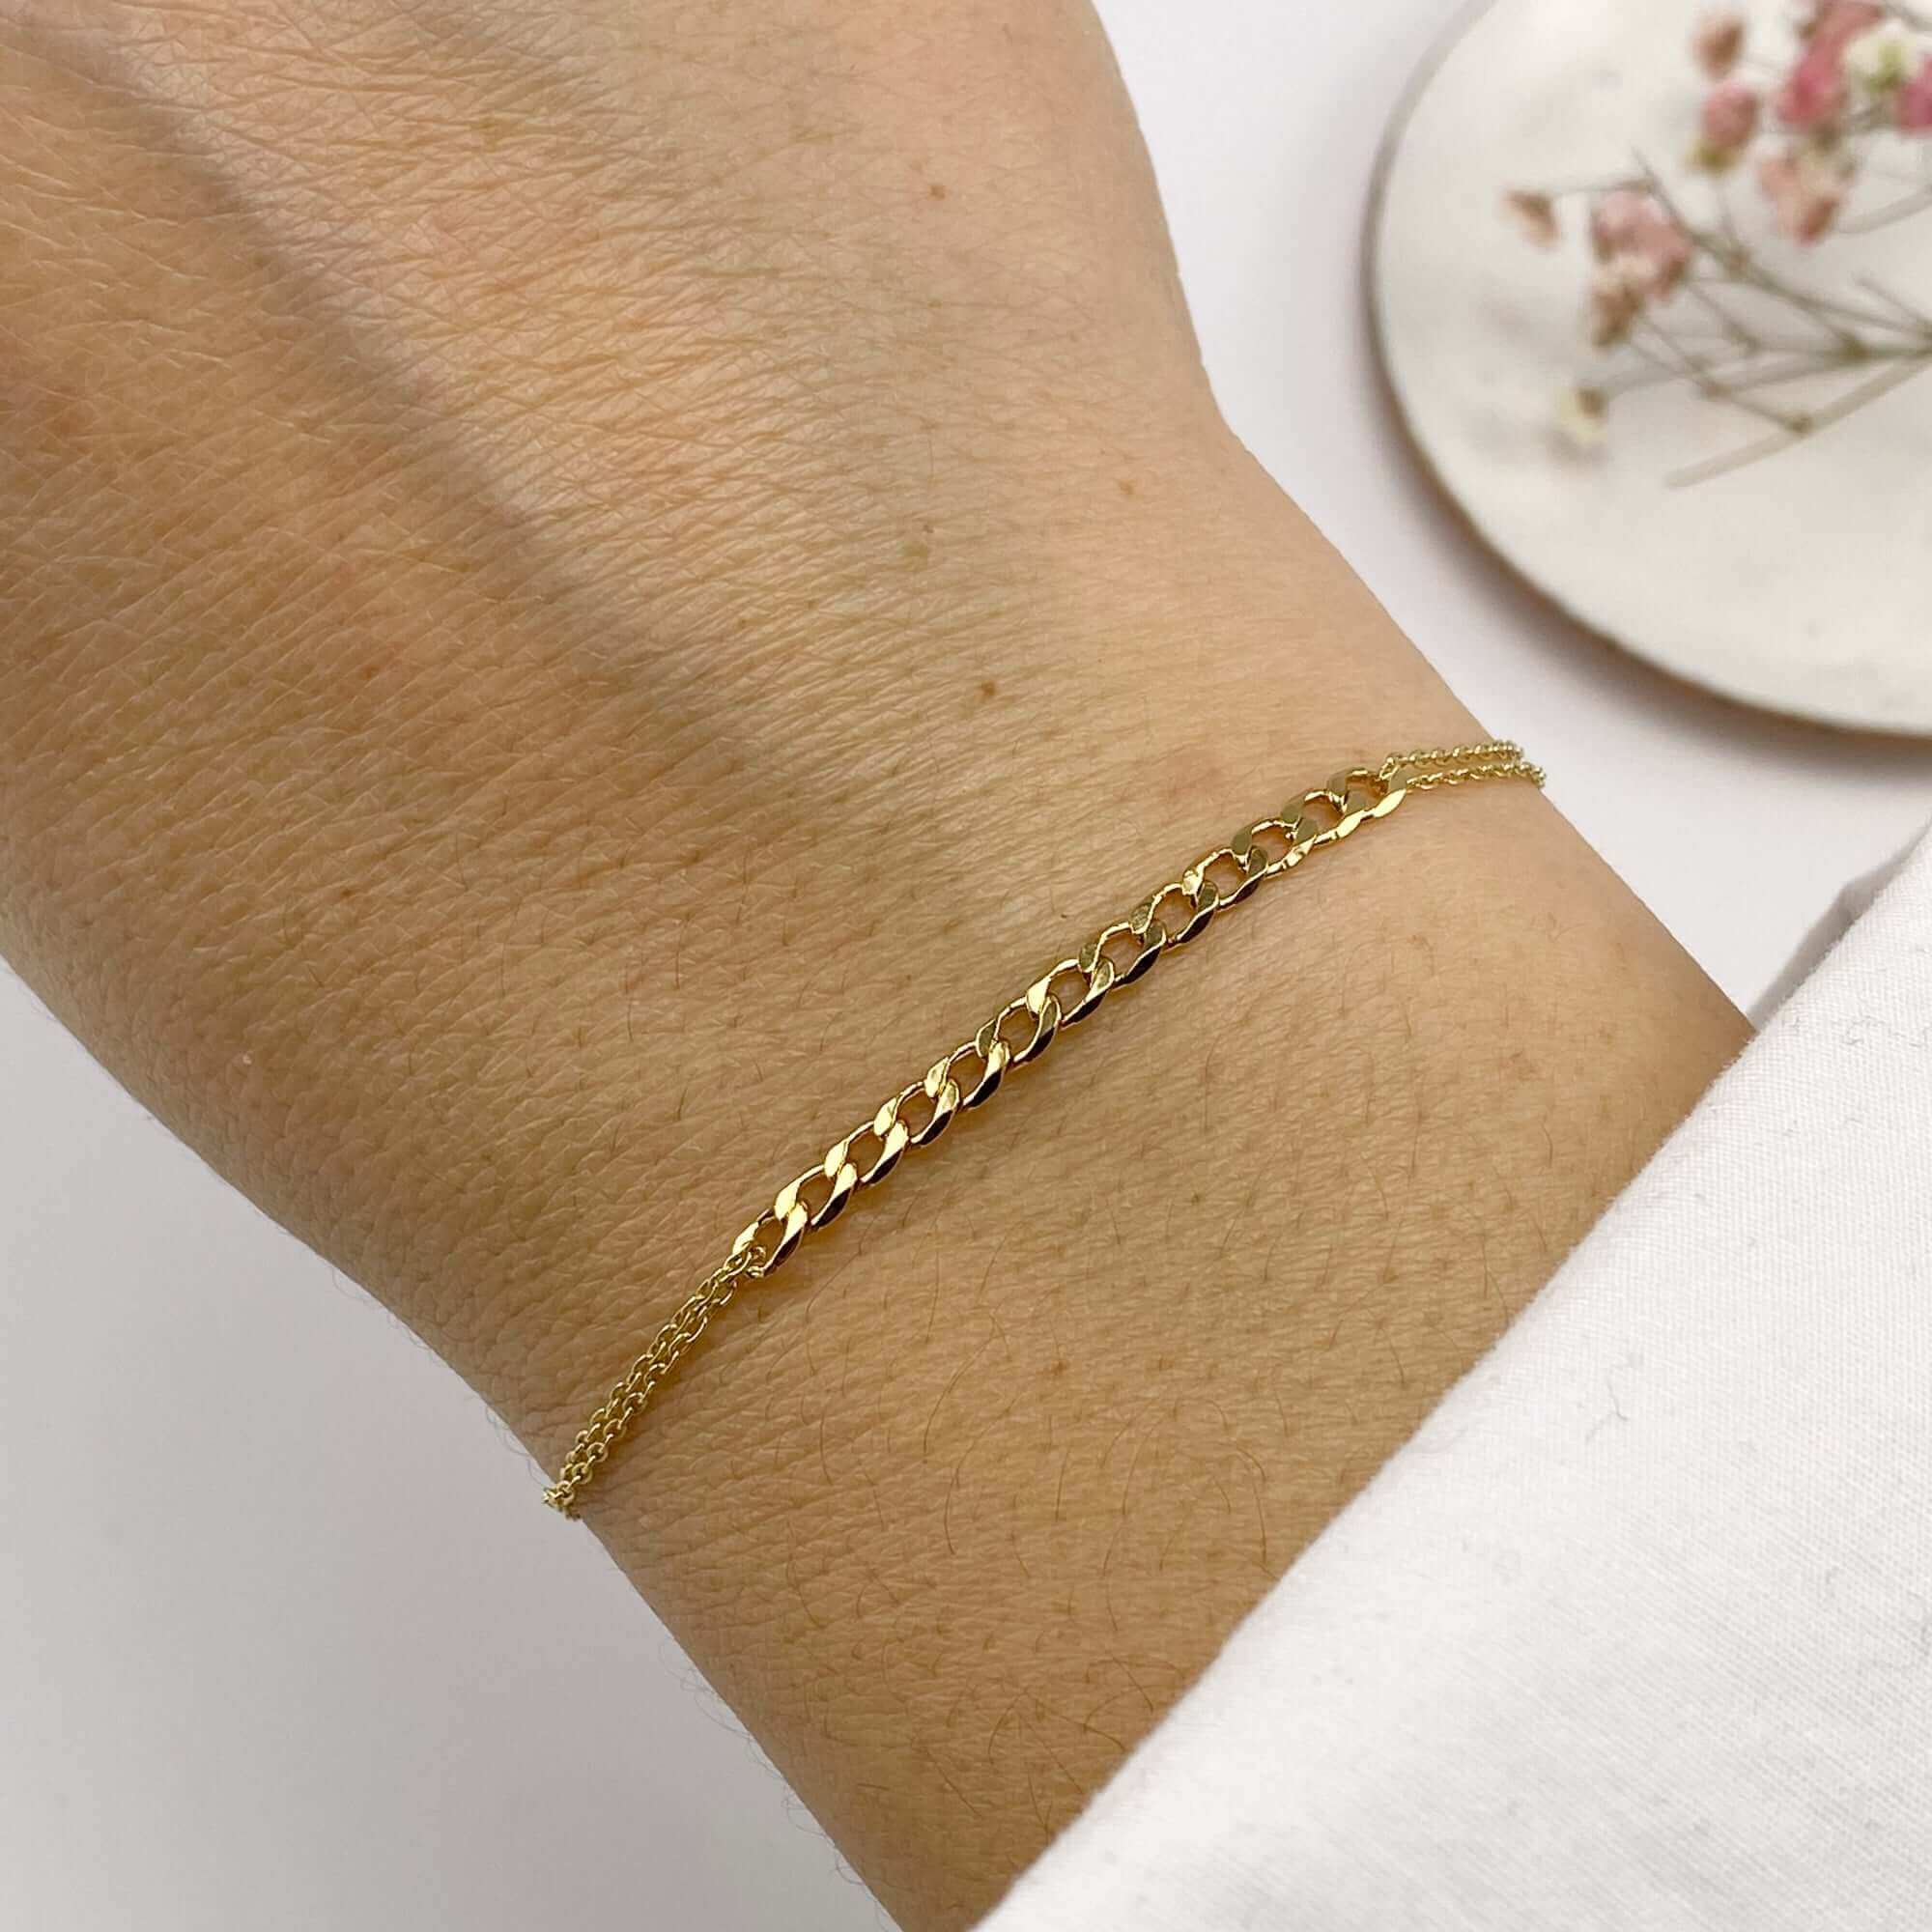 Bracelet Guide How to Wear a Delicate Gold Bracelet  Liz James Designs